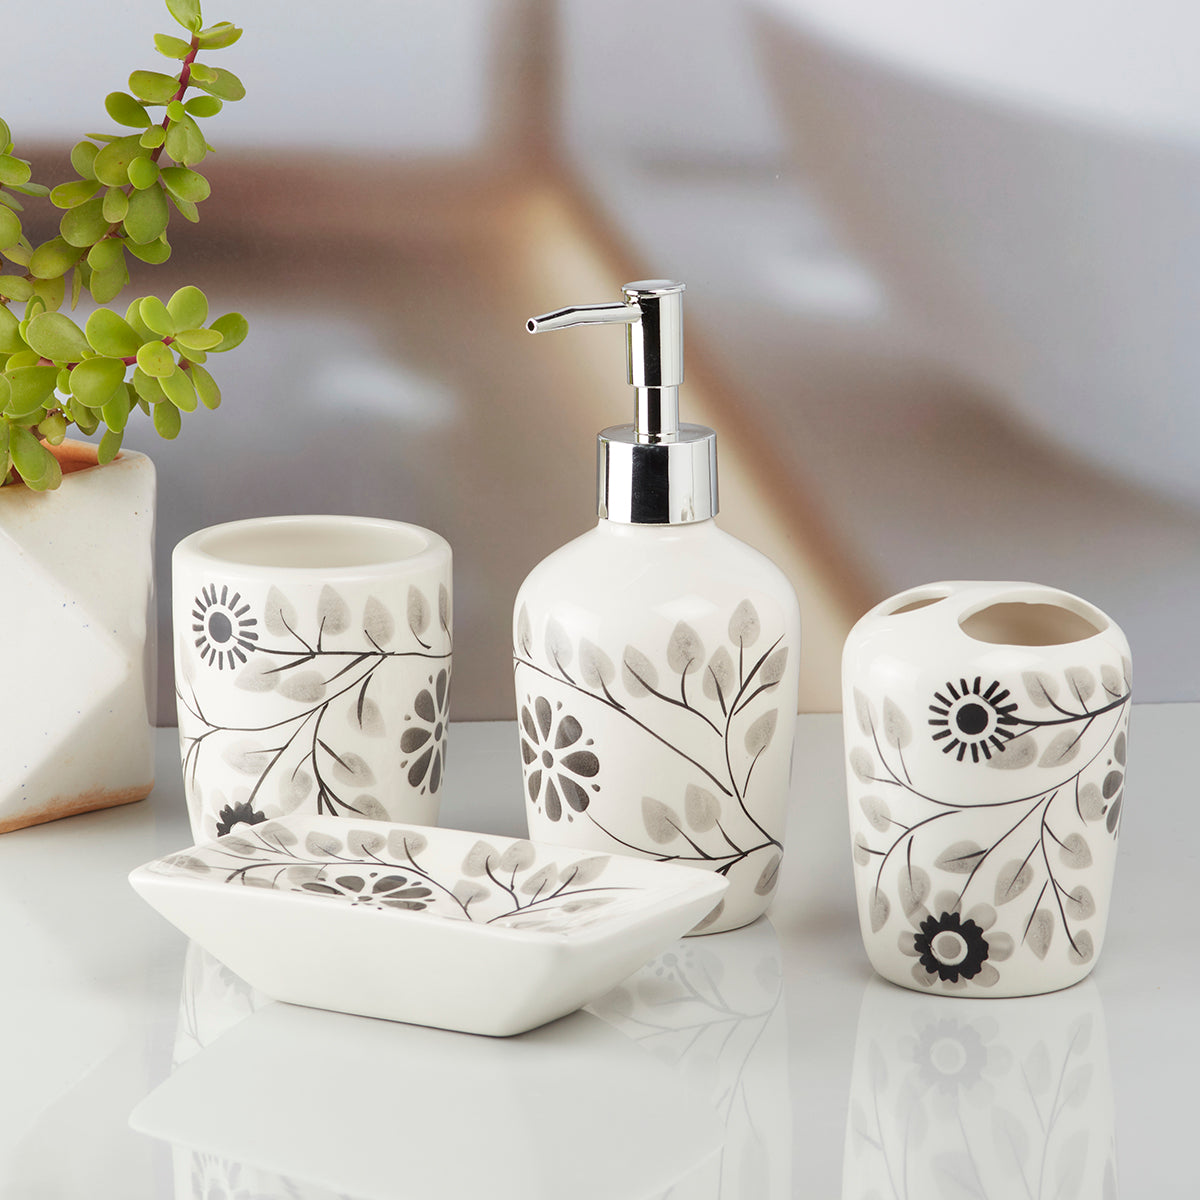 Ceramic Bathroom Accessories Set of 4 Bath Set with Soap Dispenser (10164)